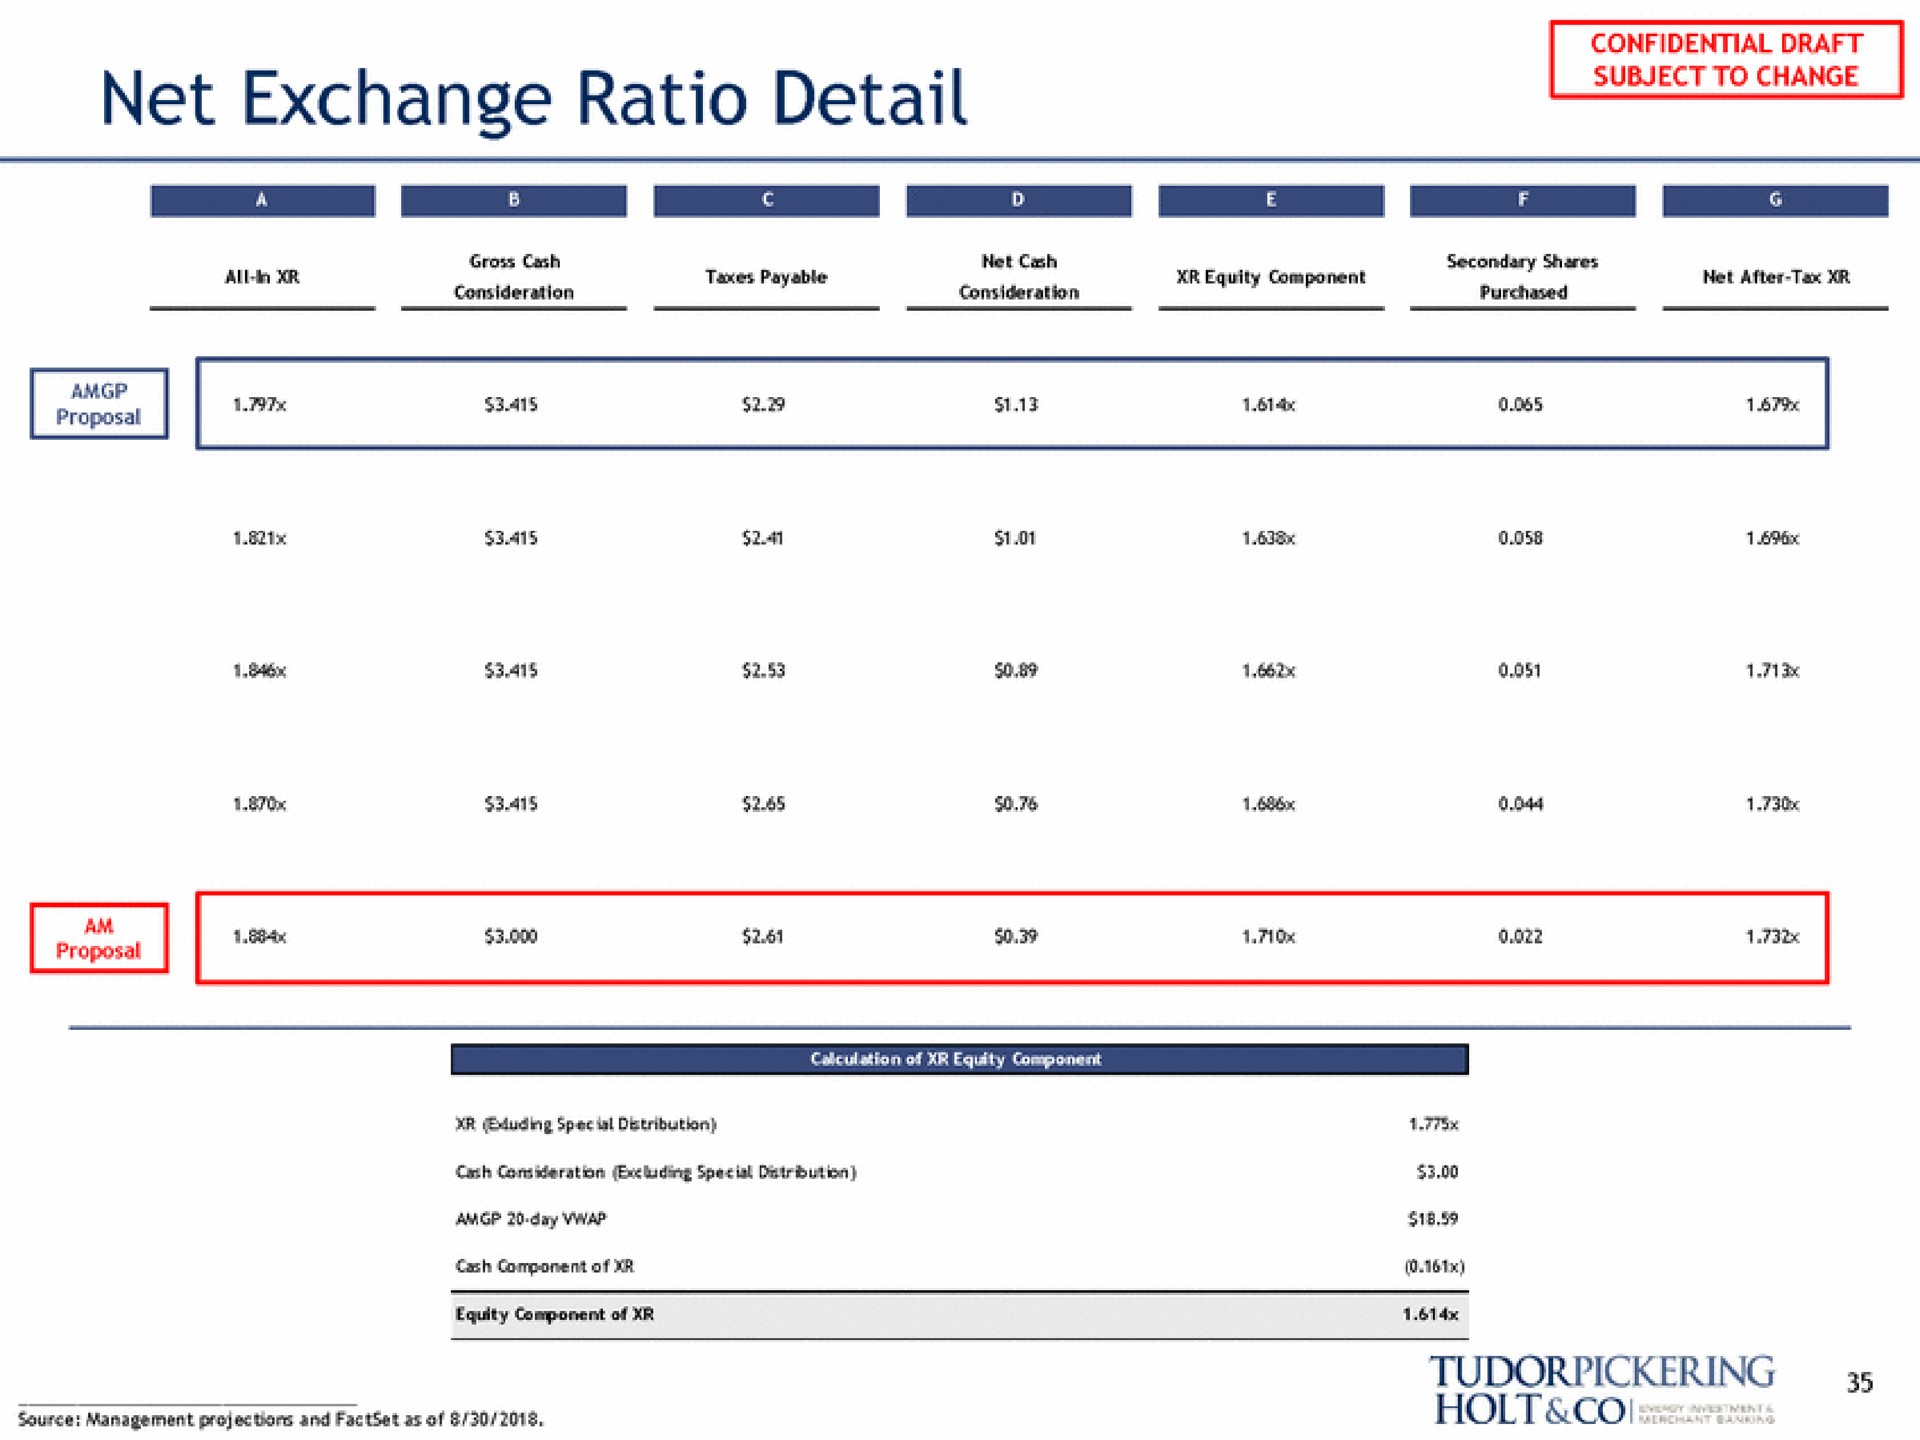 net exchange ratio detail reel gee | Tudor, Pickering, Holt & Co